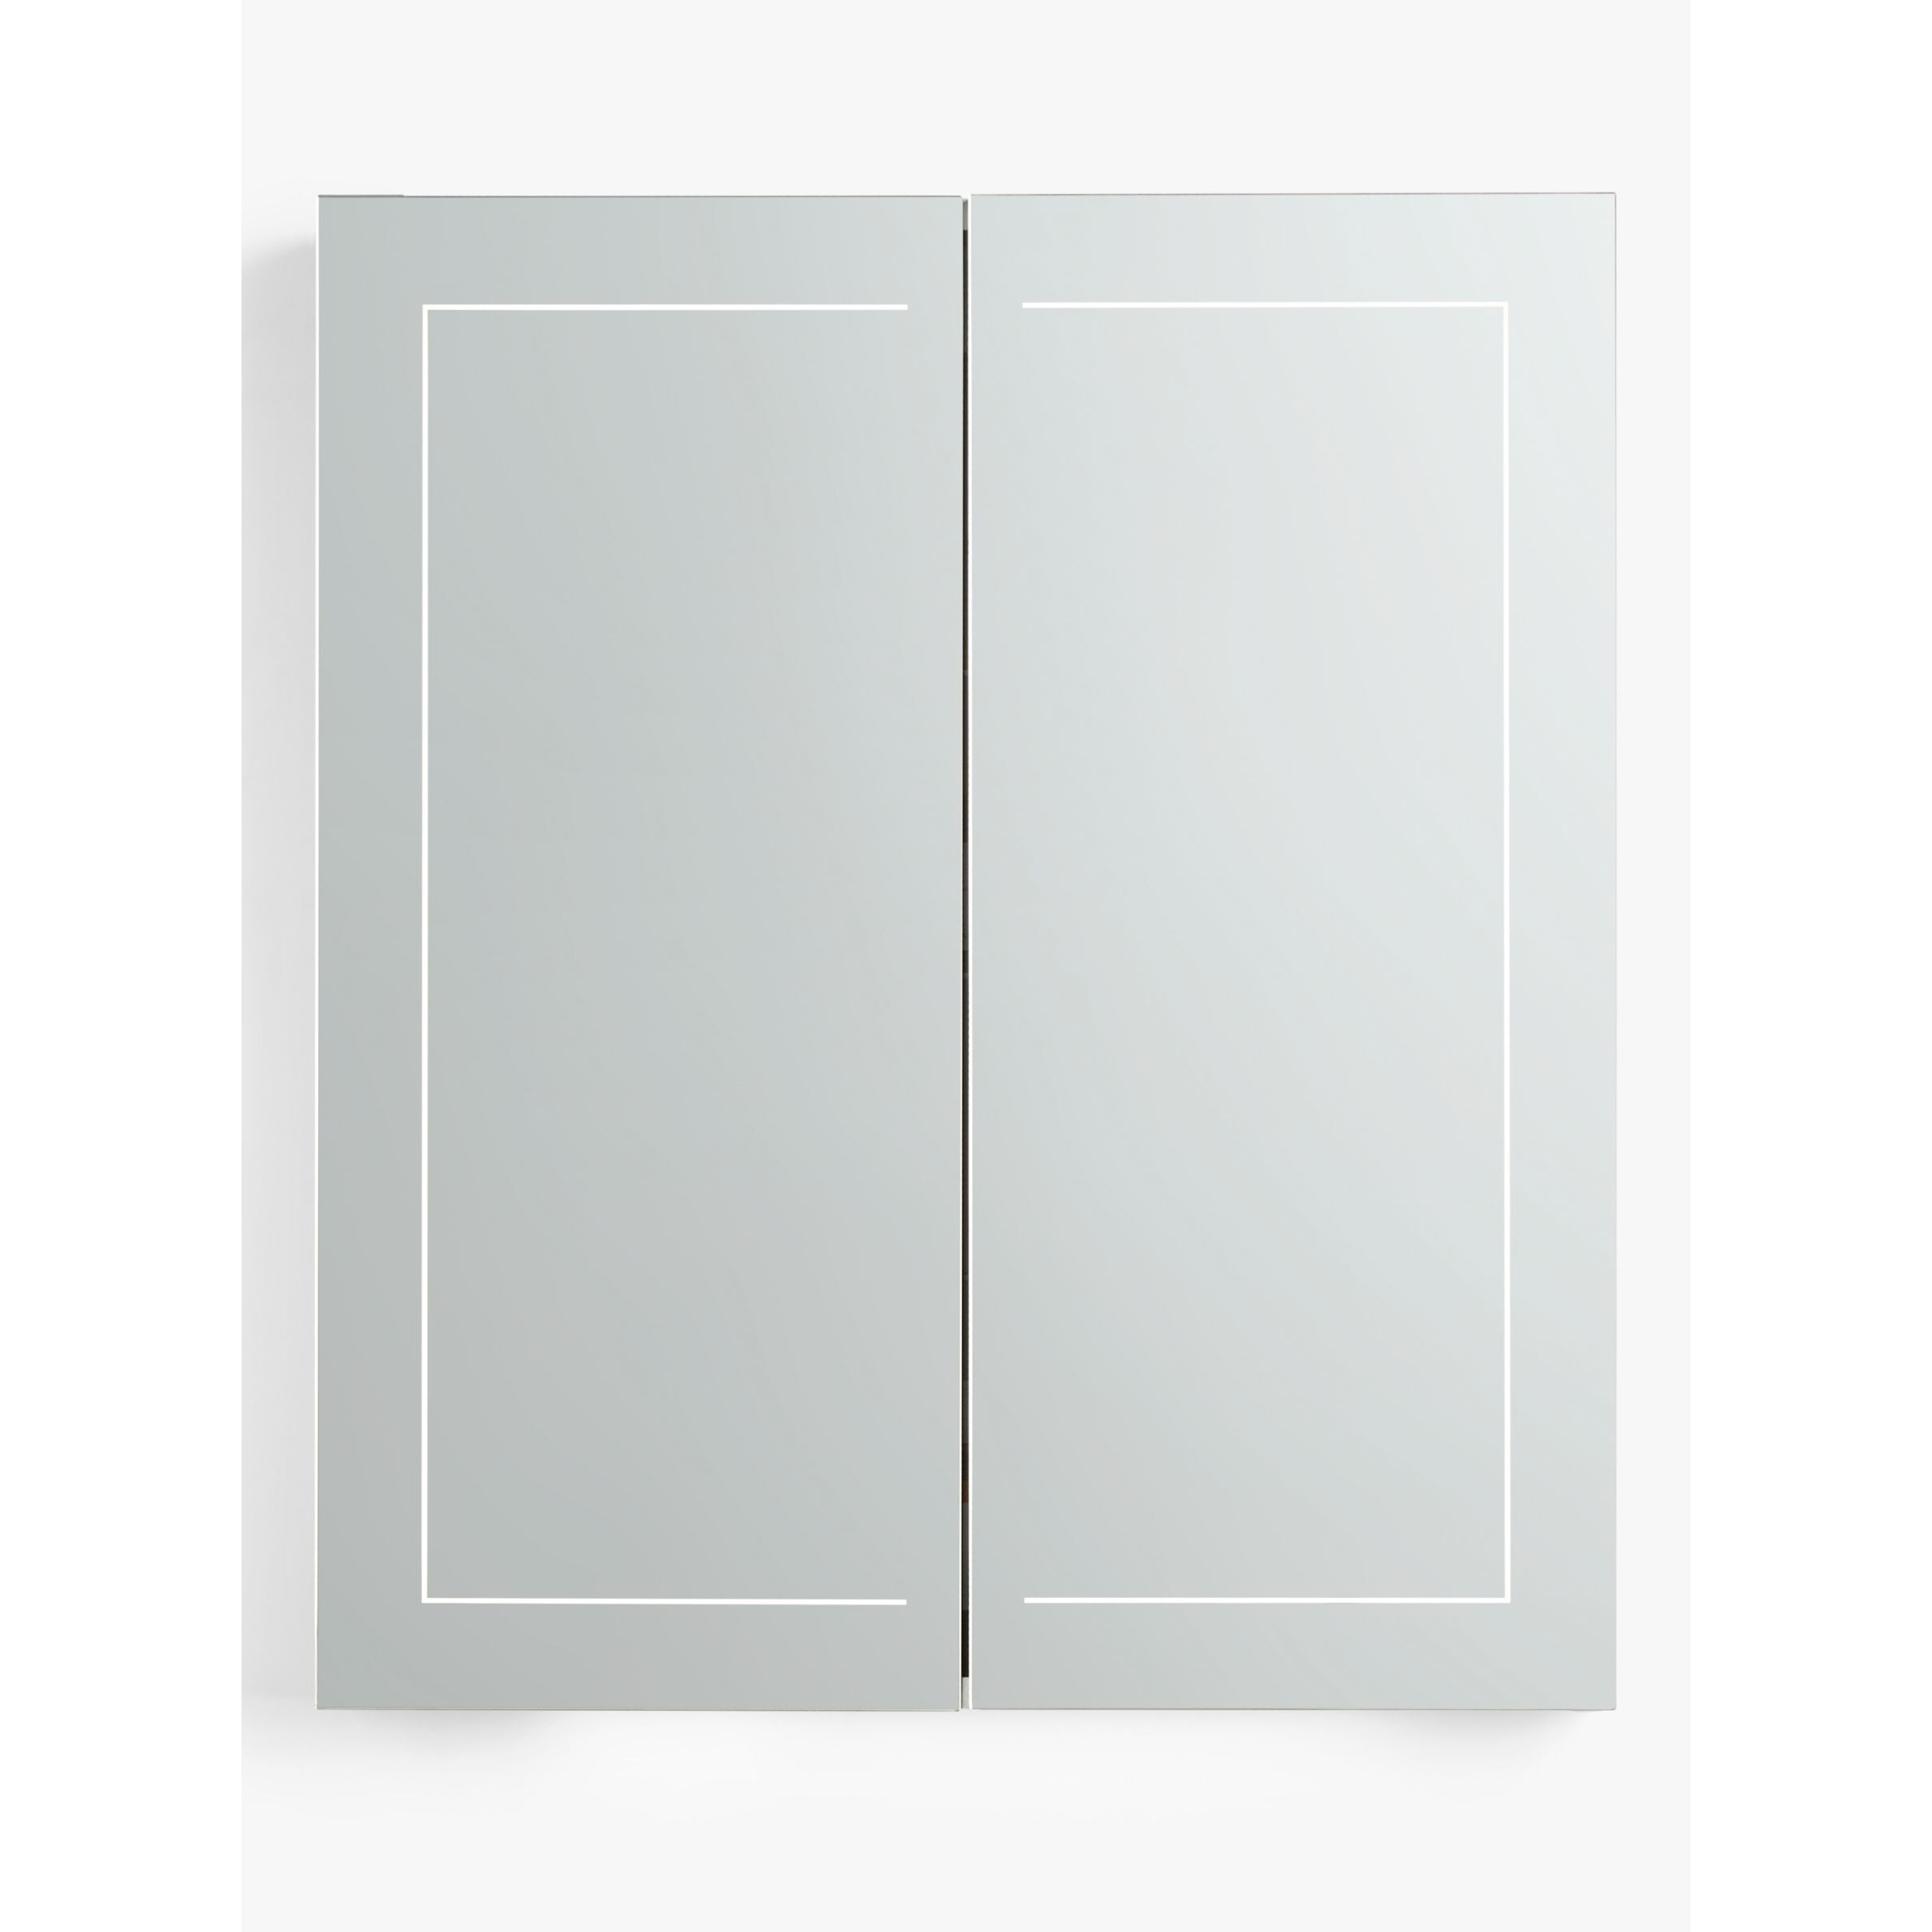 John Lewis Enclose Double Mirrored and Illuminated Bathroom Cabinet - image 1